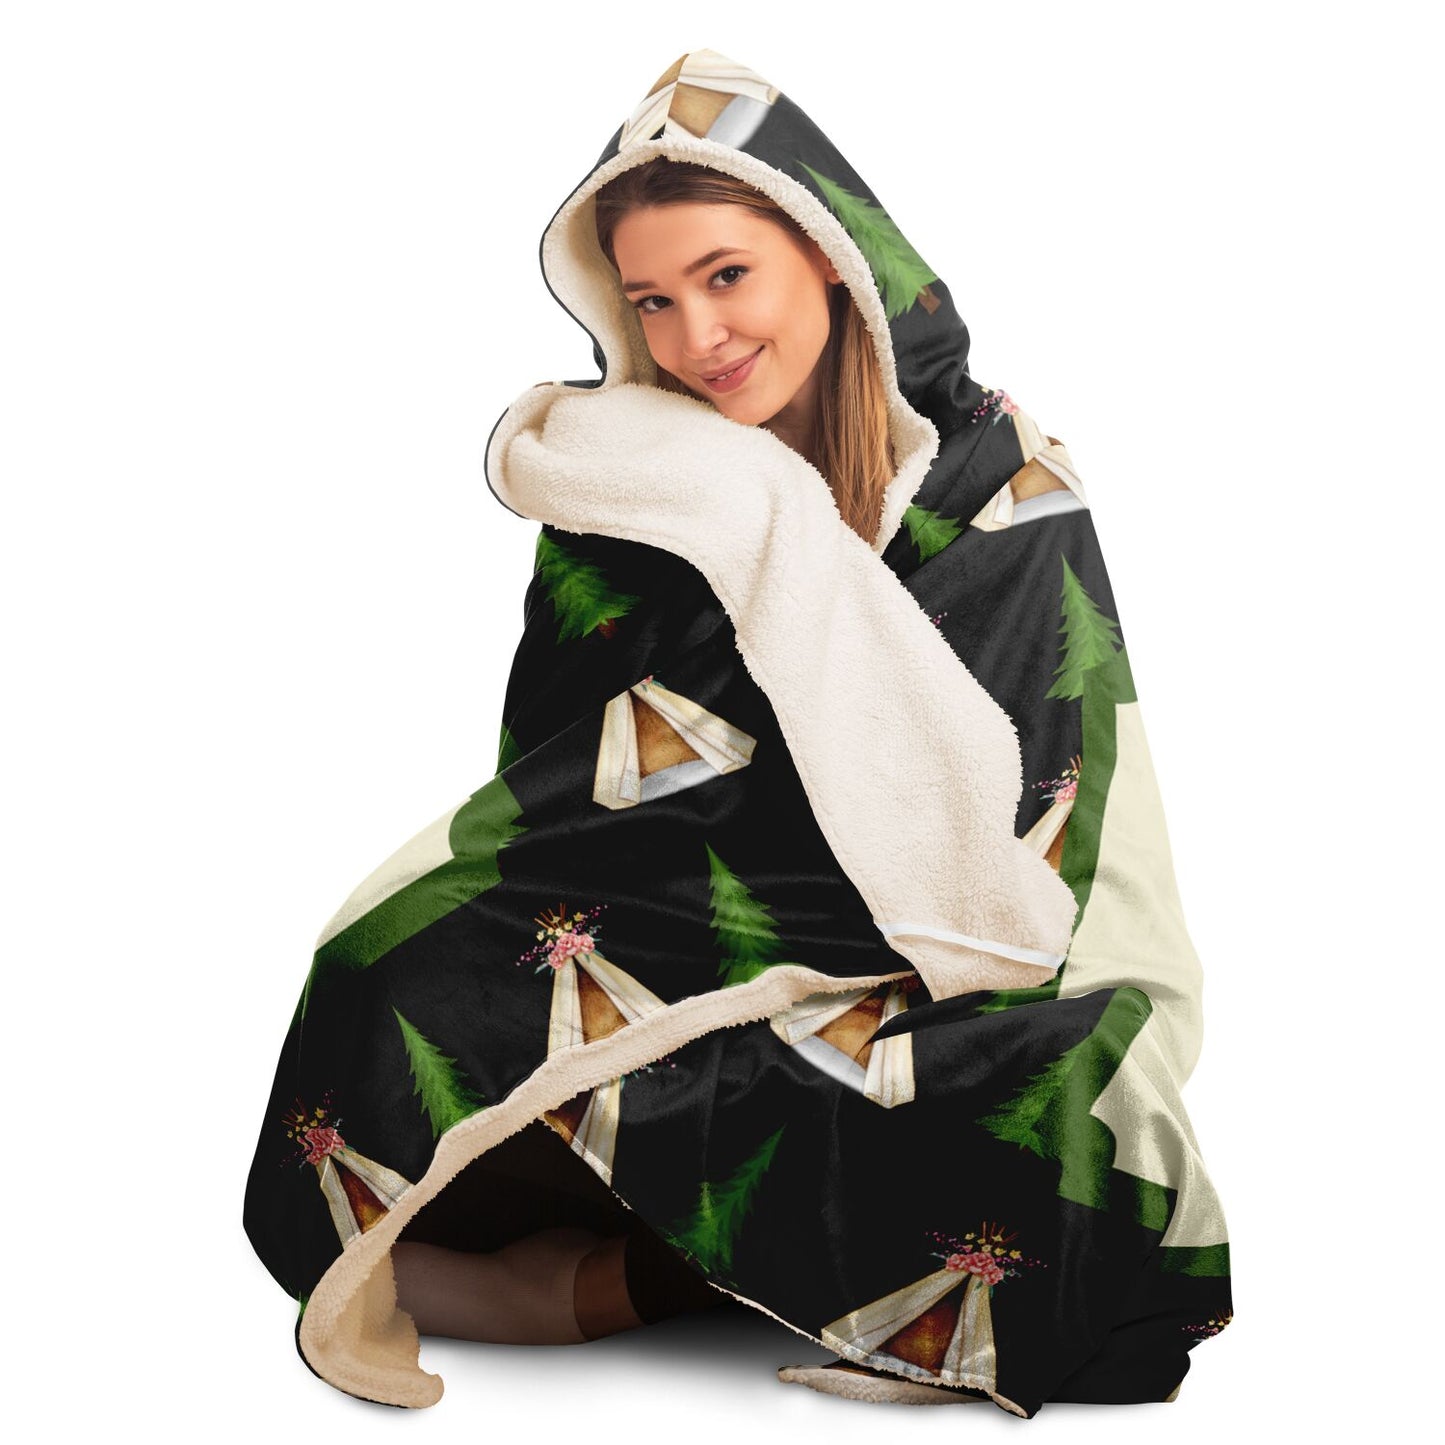 Take Me Camping Hooded Blanket - Black